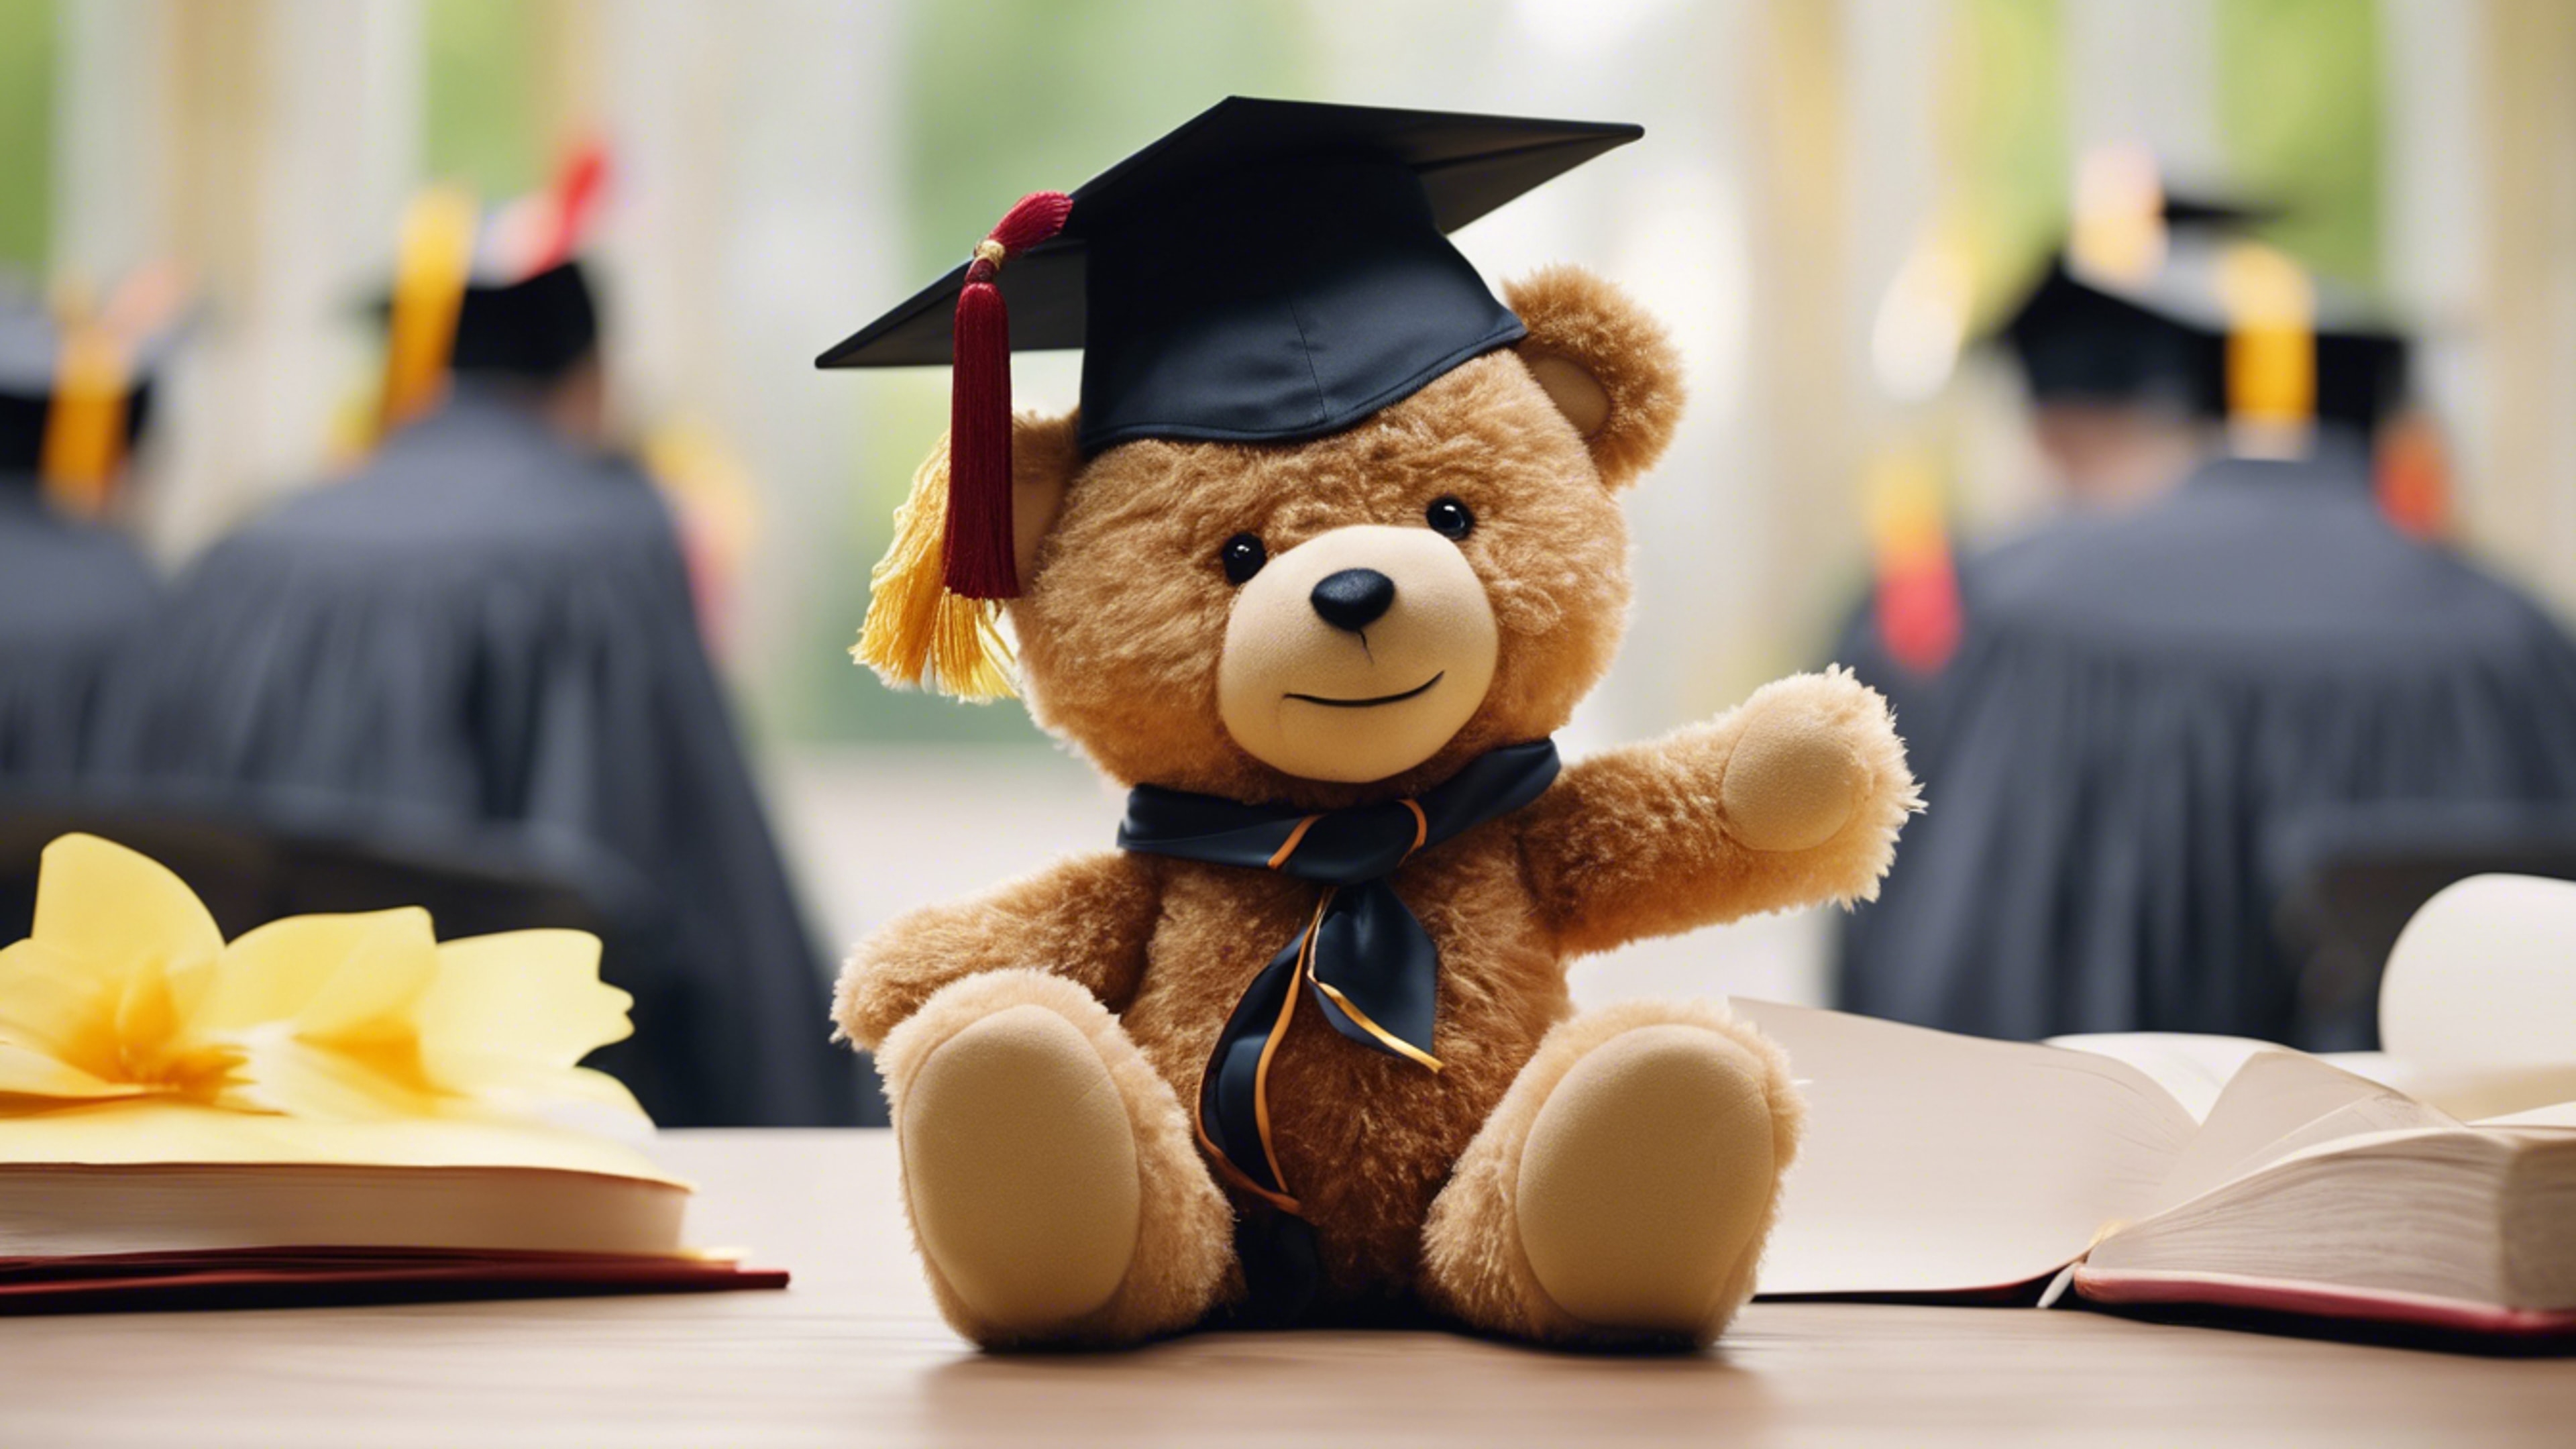 A teddy bear wearing graduation cap and diploma, amidst a graduation ceremony. Tapeta[88eefa047aa0490a9f74]